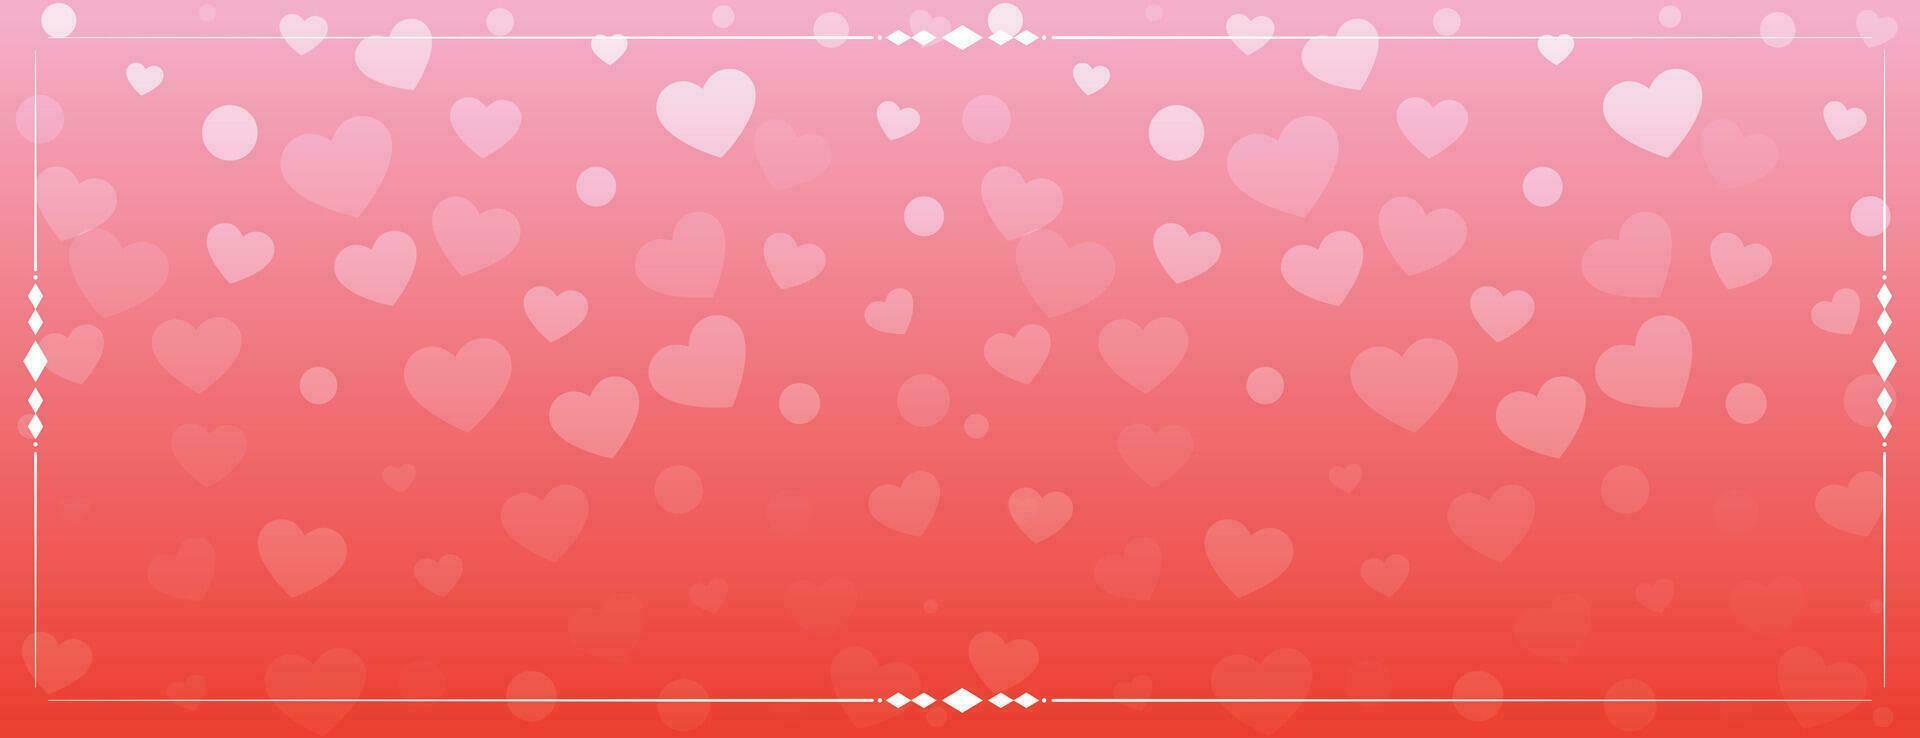 shiny hearts pattern banner design vector